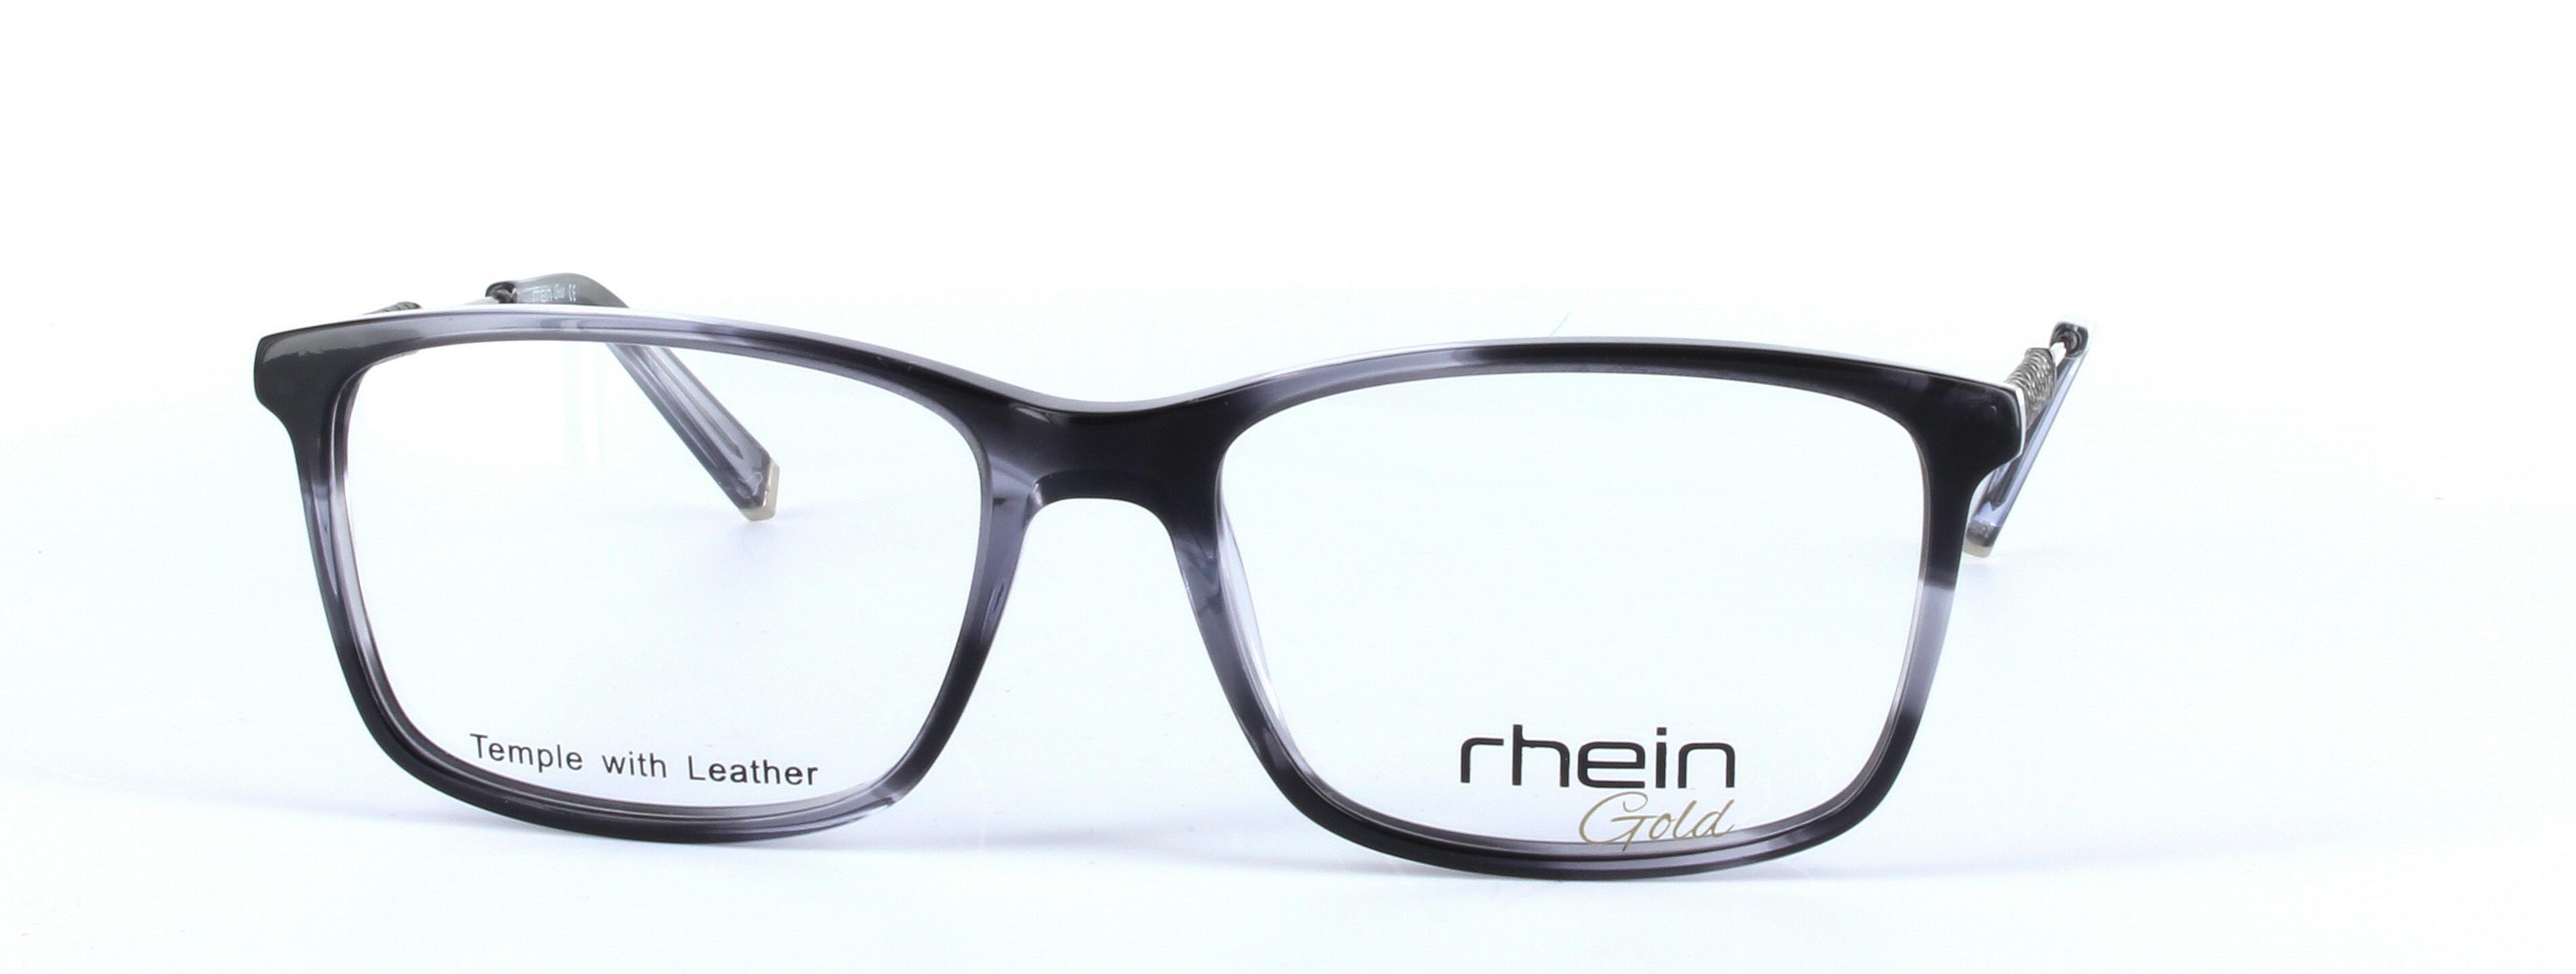 Durham Grey Full Rim Oval Rectangular Plastic Glasses - Image View 5